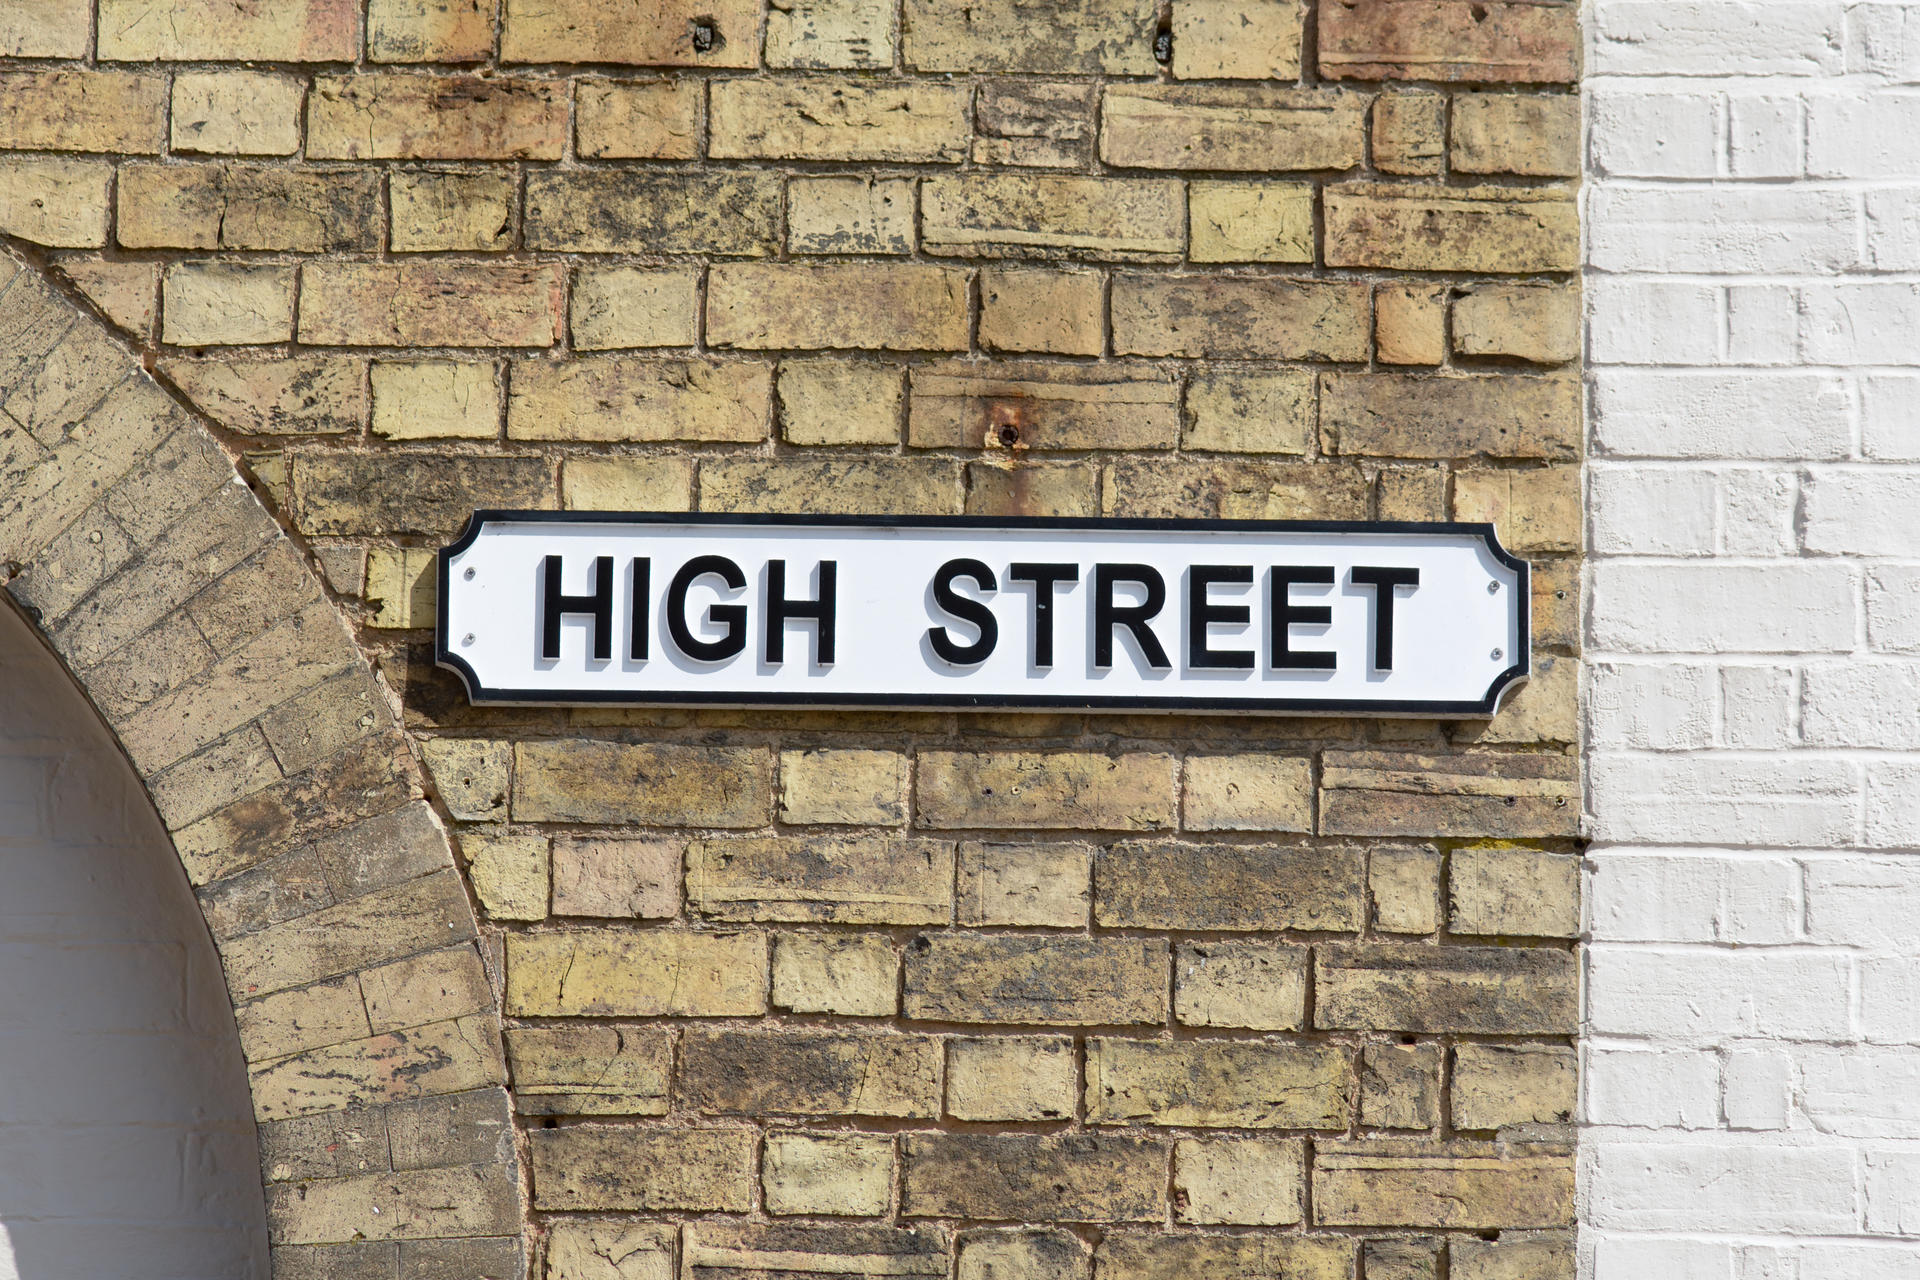 High street image